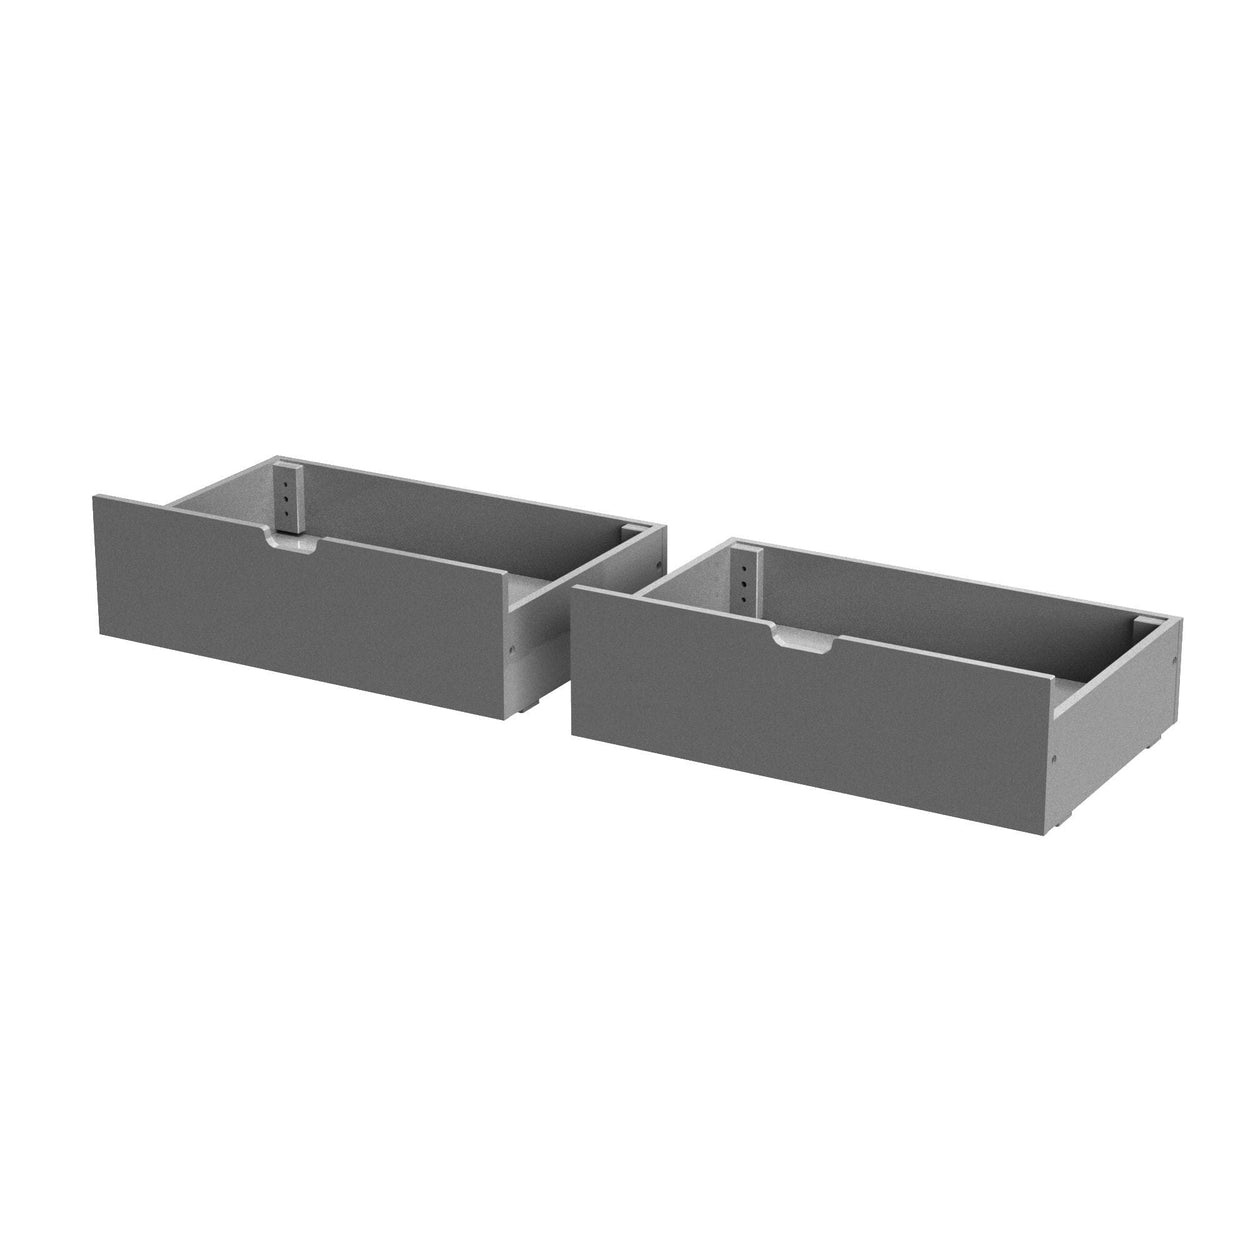 175262-121 : Component 2 Underbed Storage Drawers w/ Rubber Castors, Grey